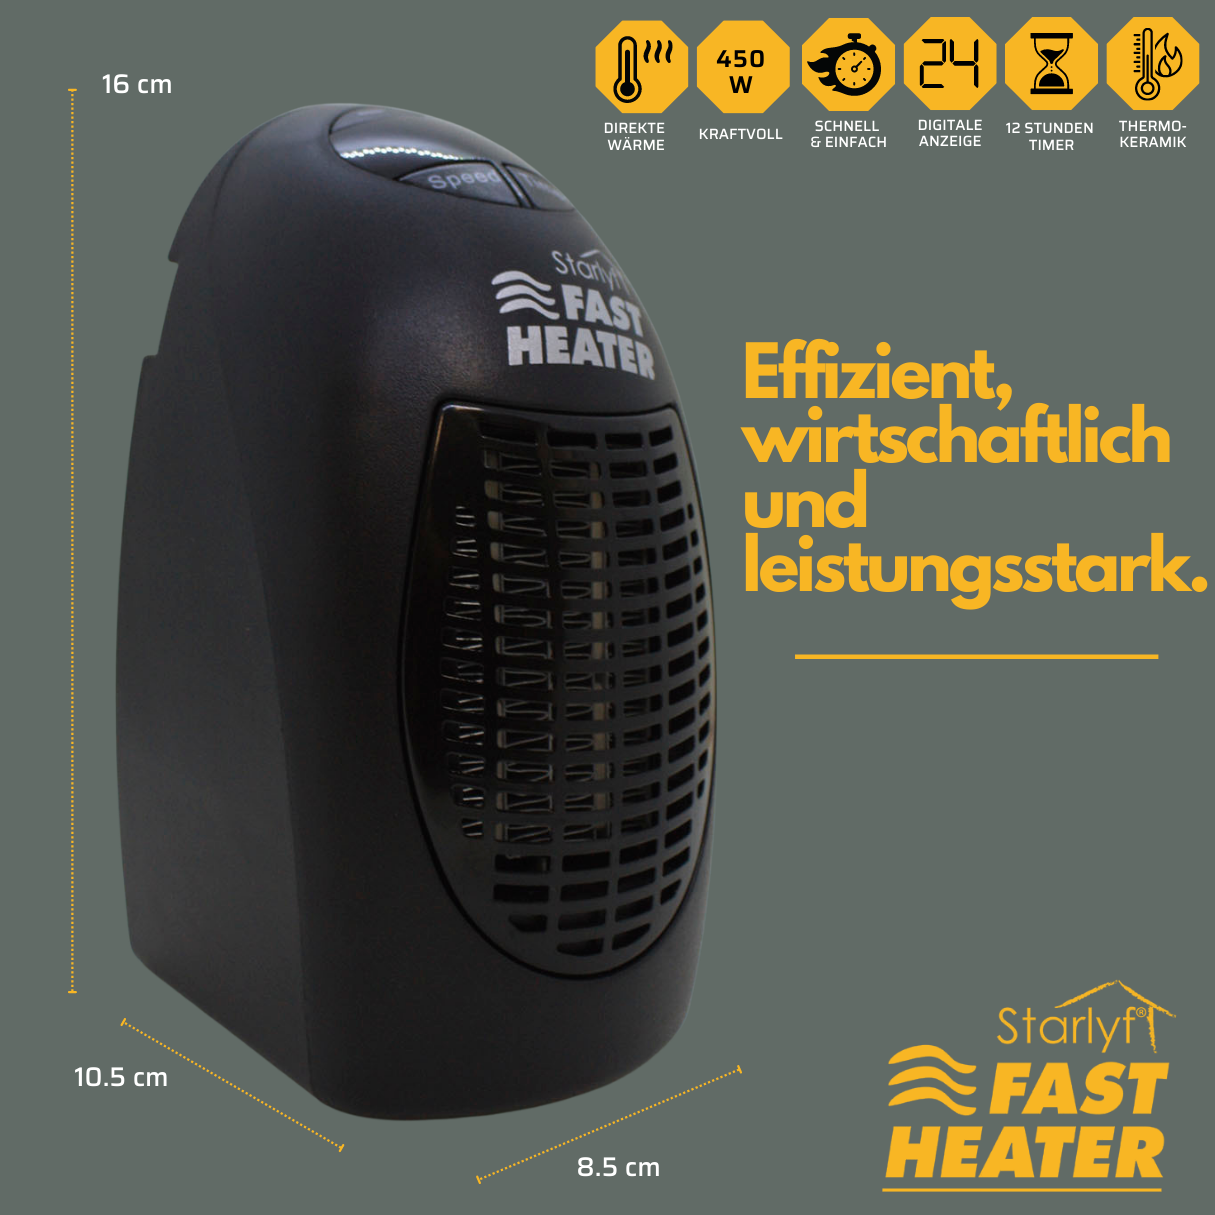 Raumgröße: Heater 15 STARLYF Schwarz Heizlüfter m²) (400 Watt, Fast